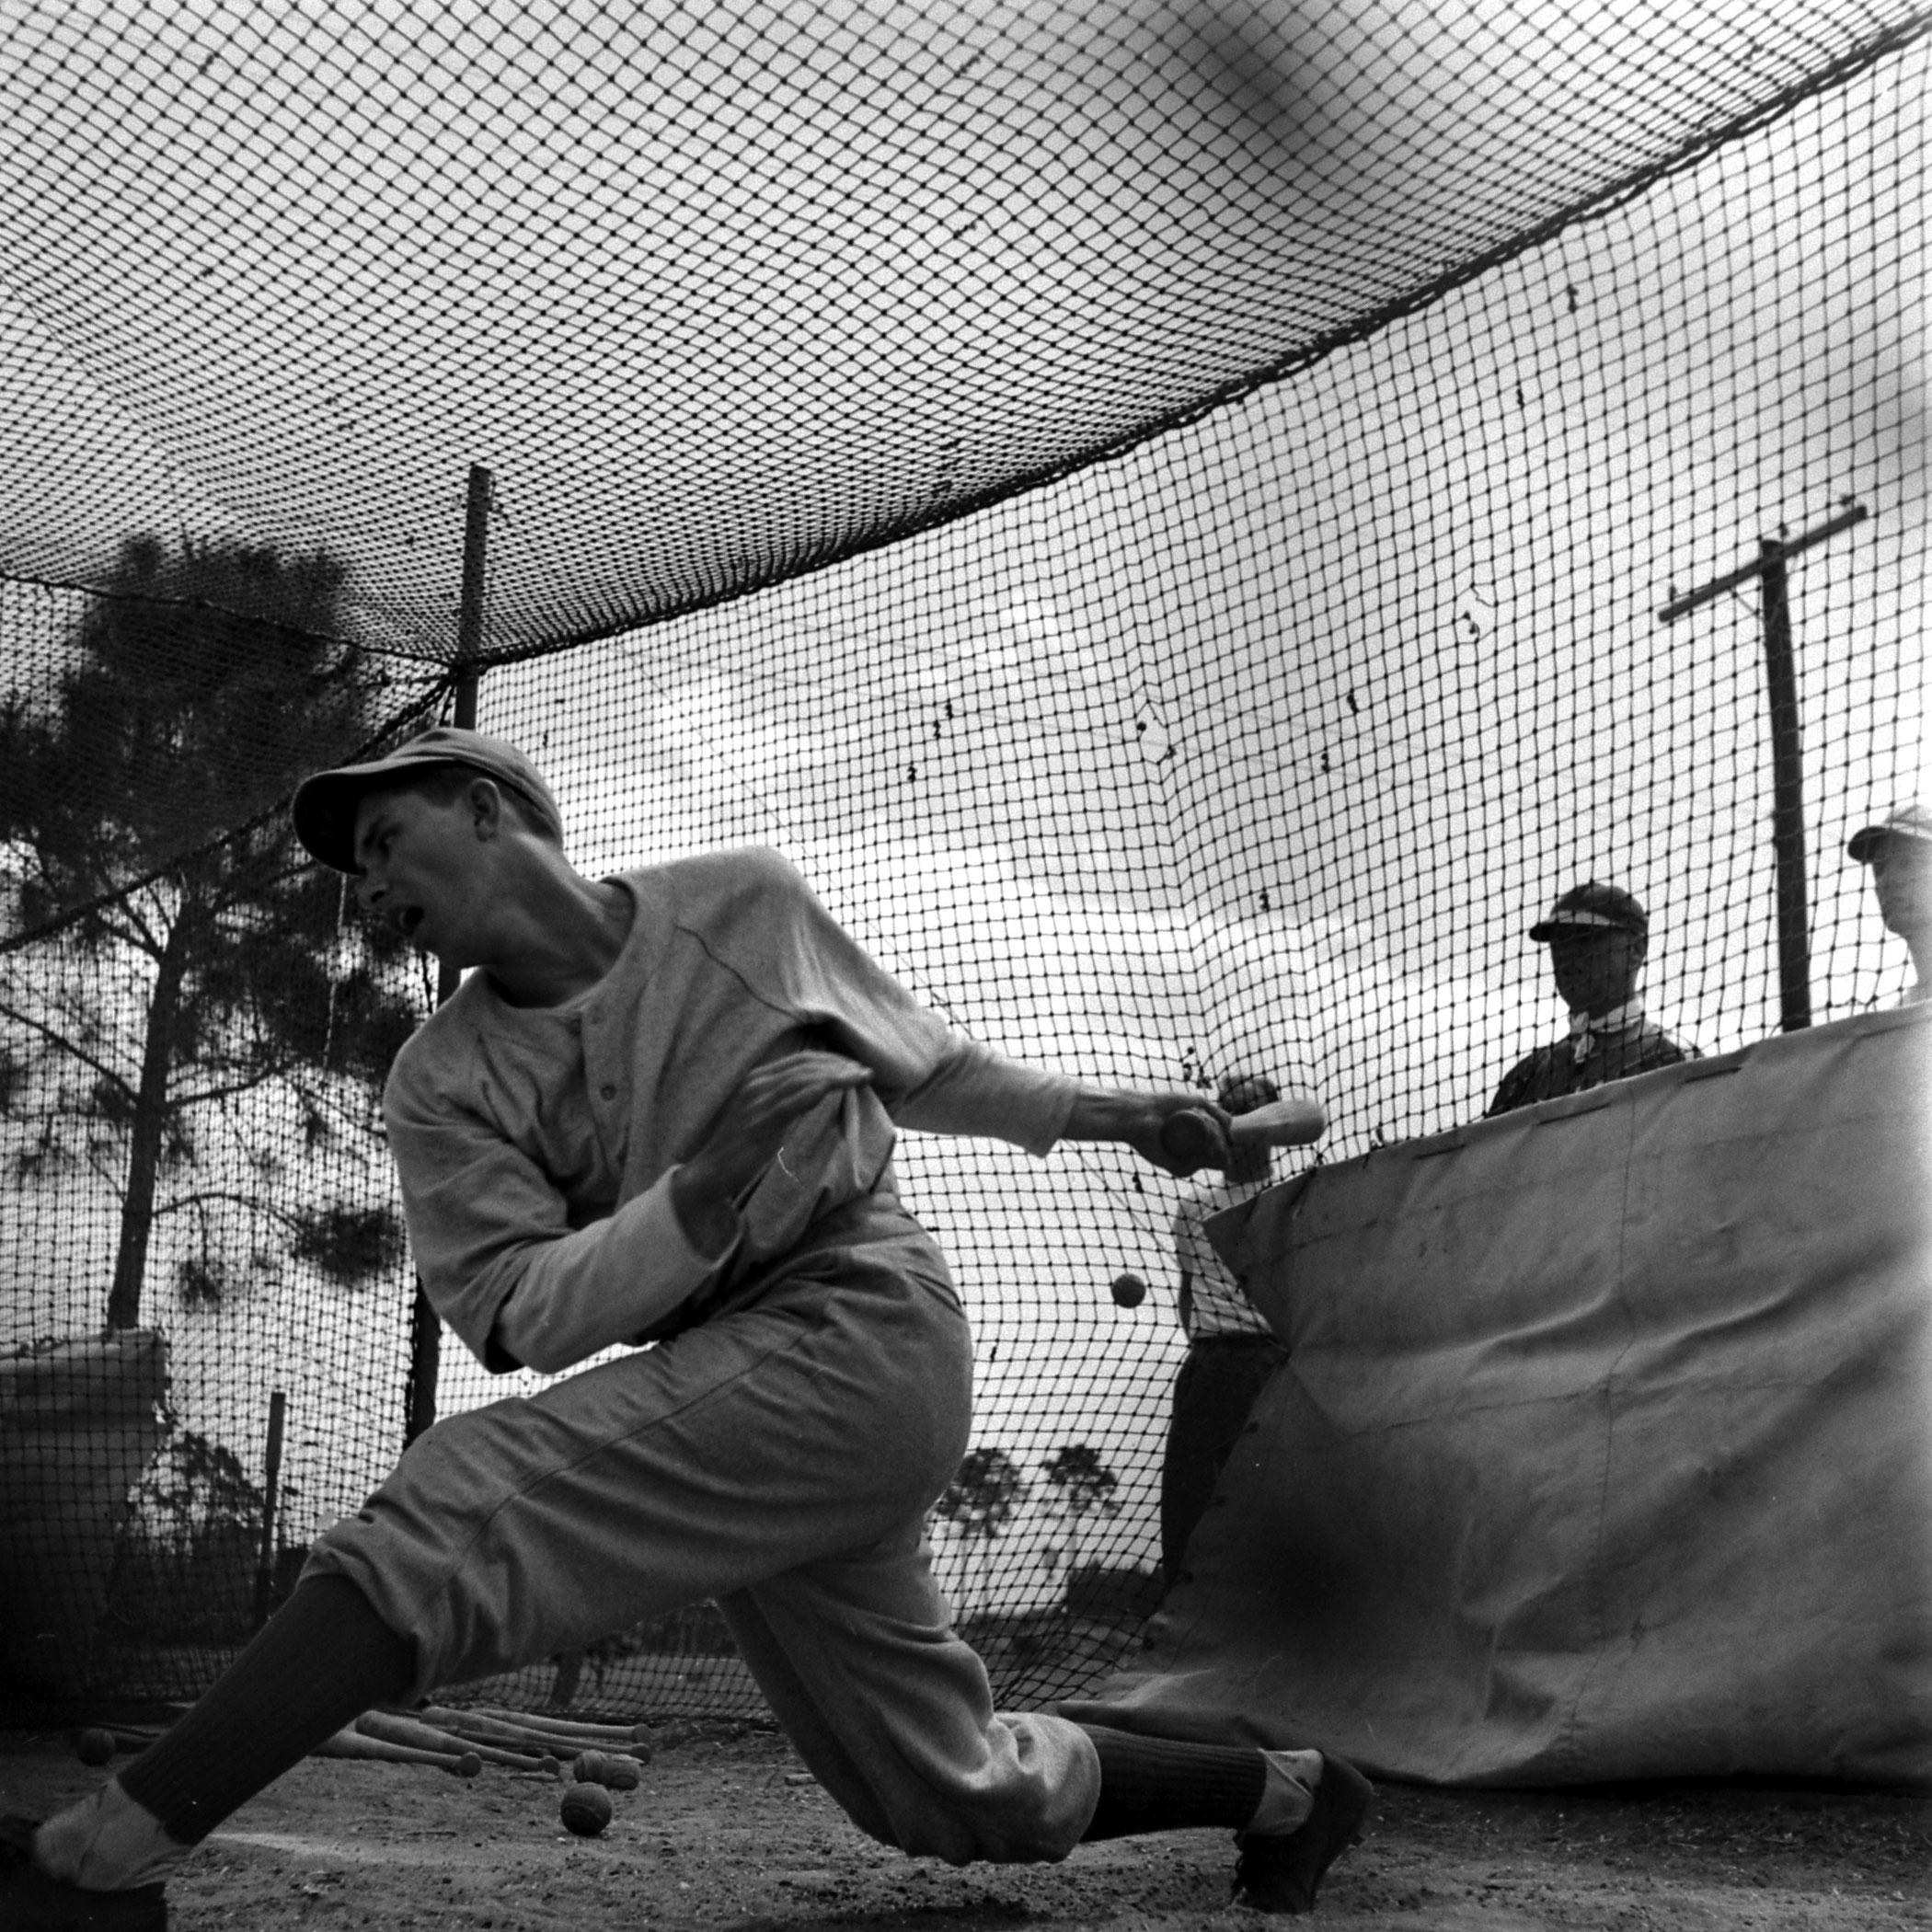 Batting practice during spring training, Vero Beach, Fla., 1948.